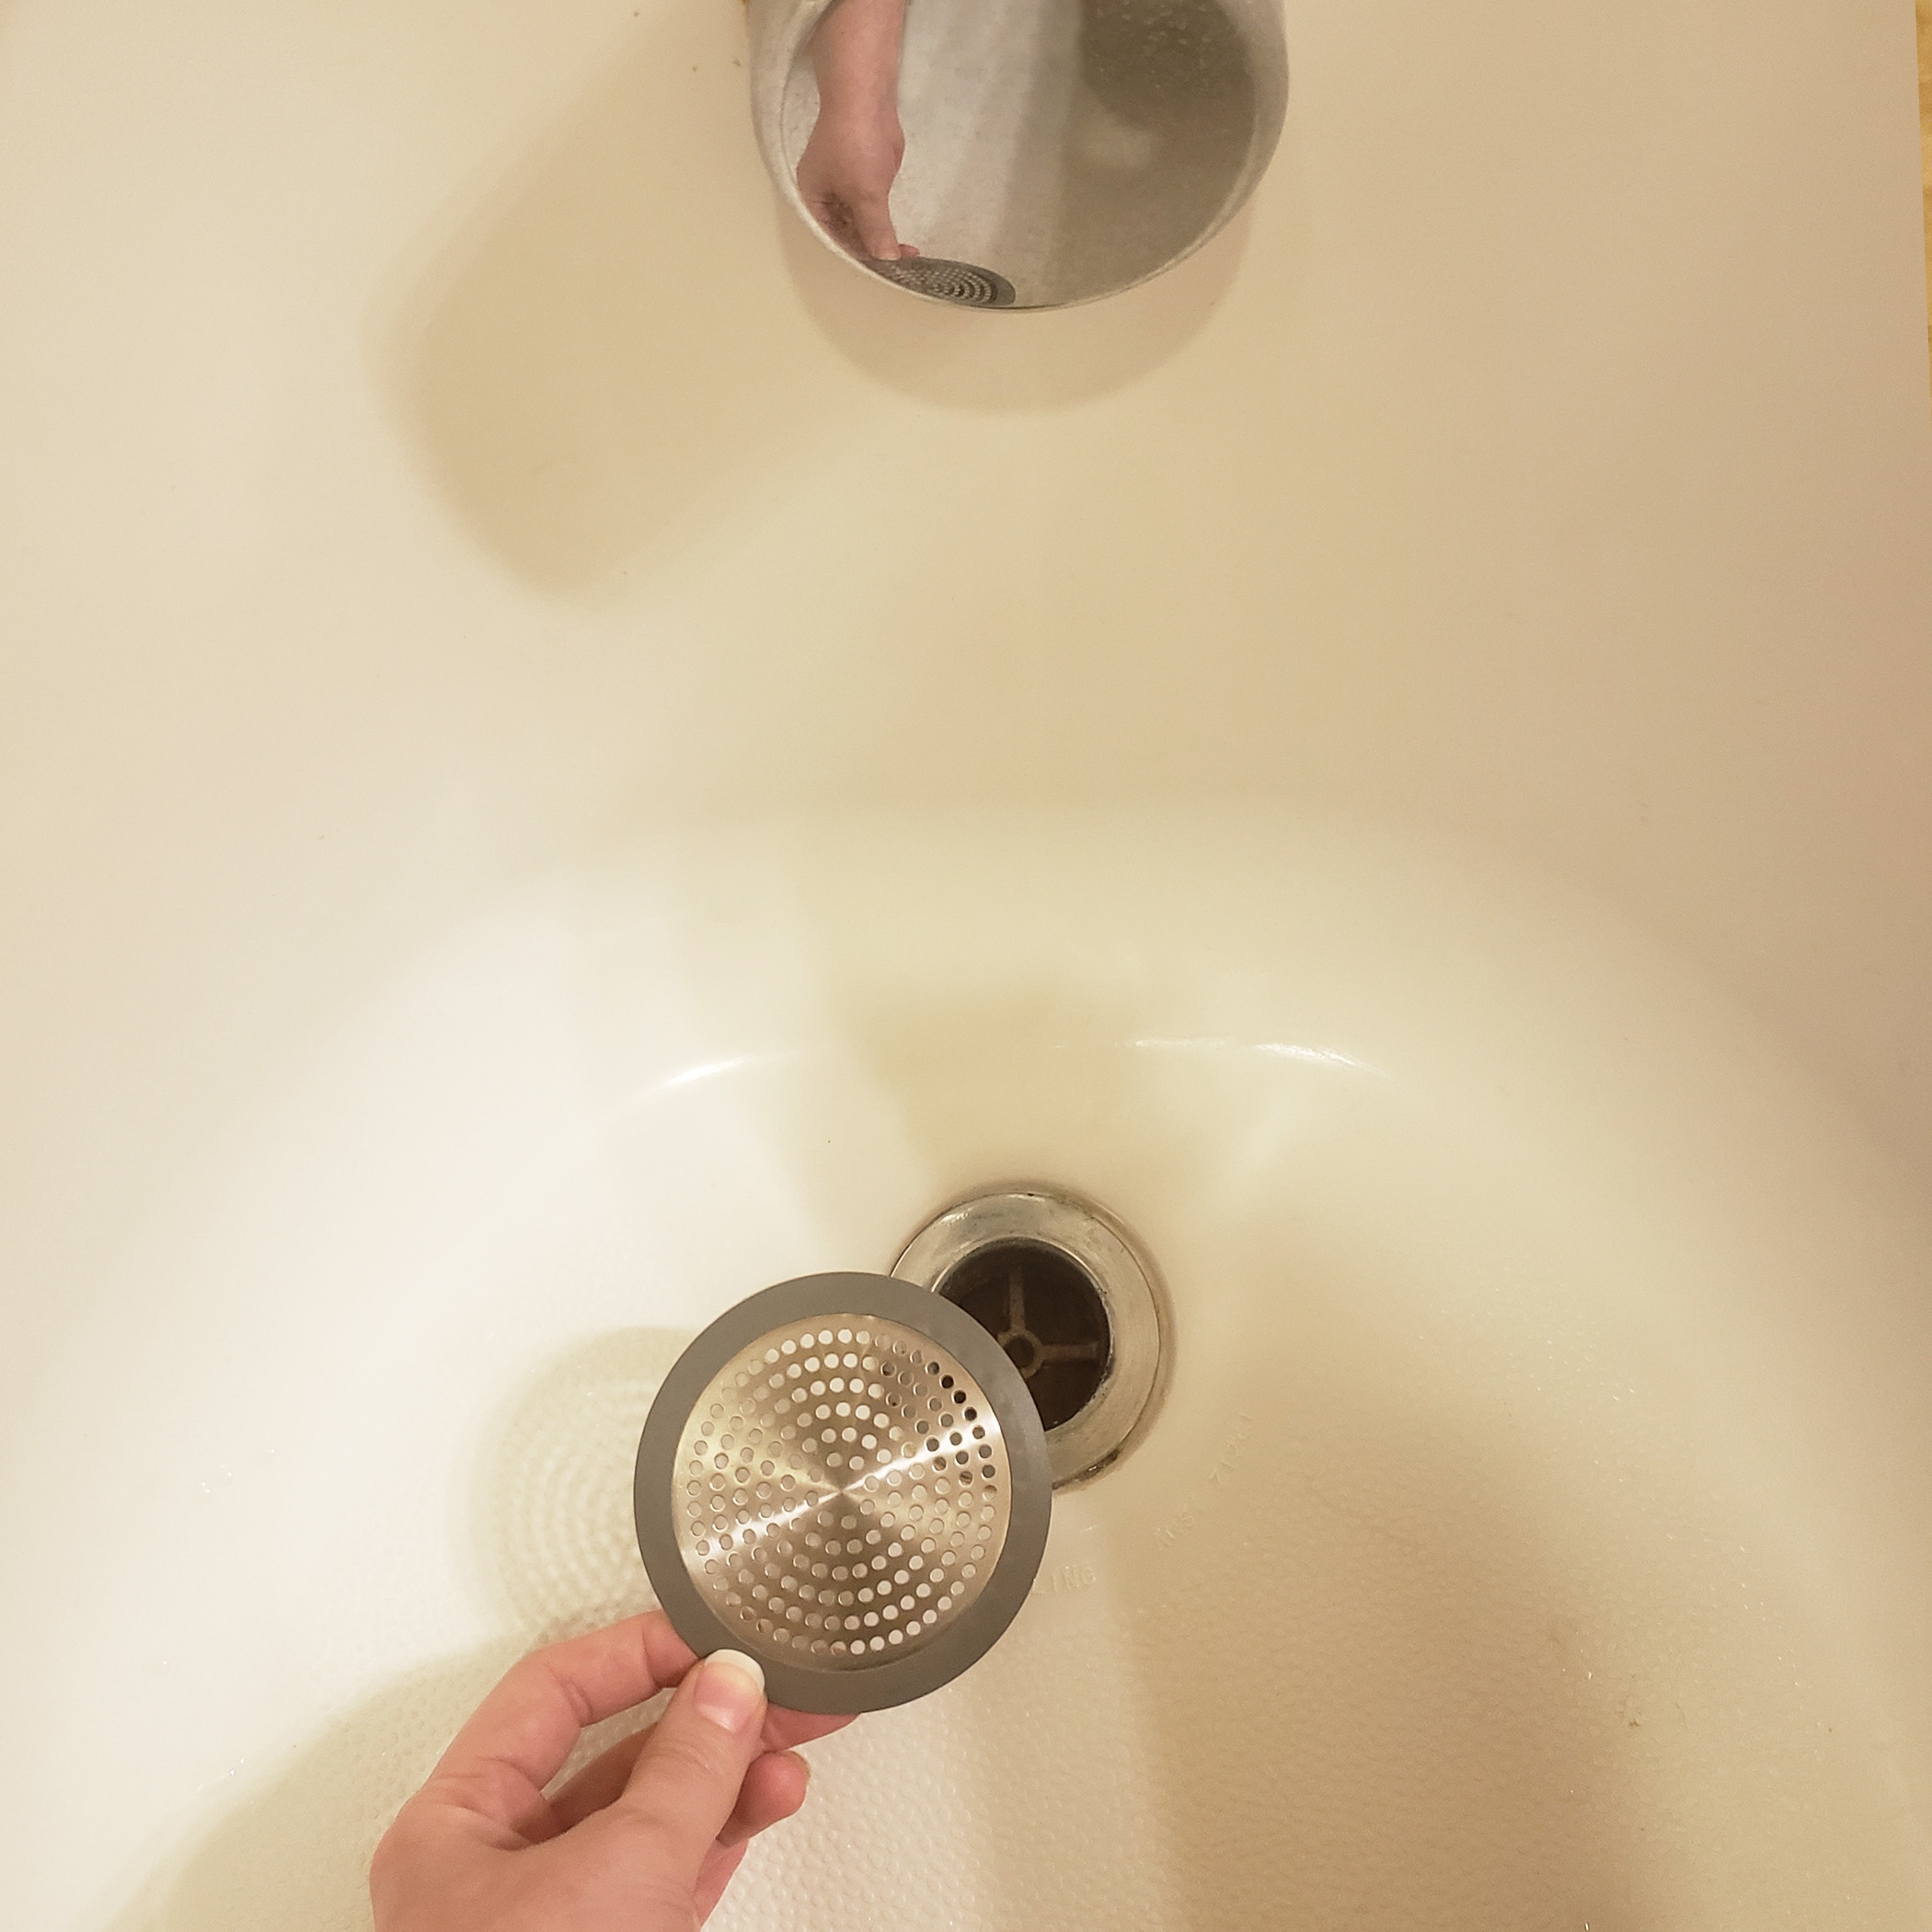 Bathroom Sink/Bathtub Hair Catcher & Drain Protector in Brushed